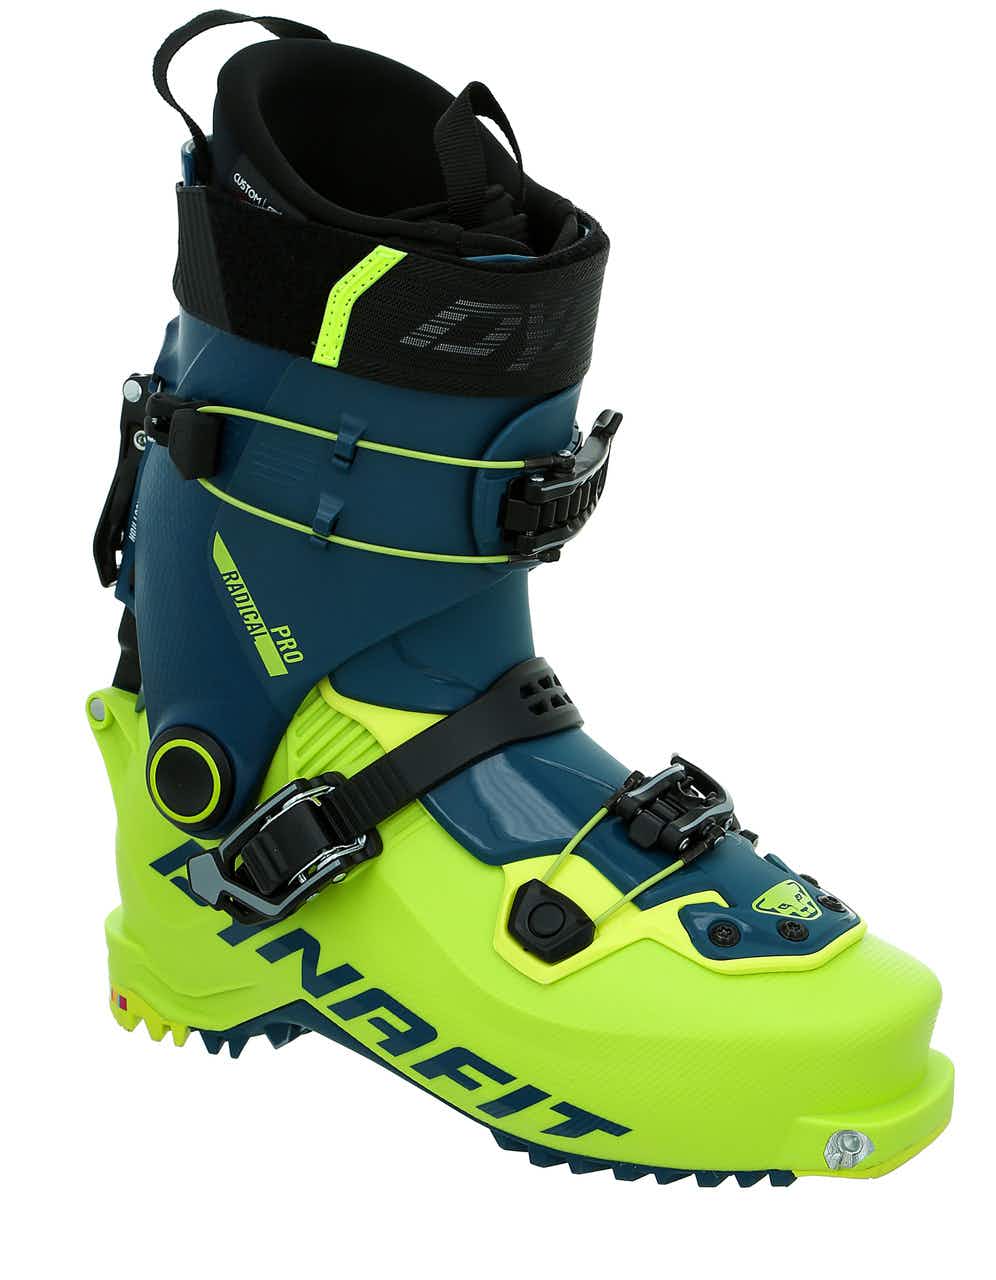 Radical Pro Ski Boots Petrol/Lime Punch